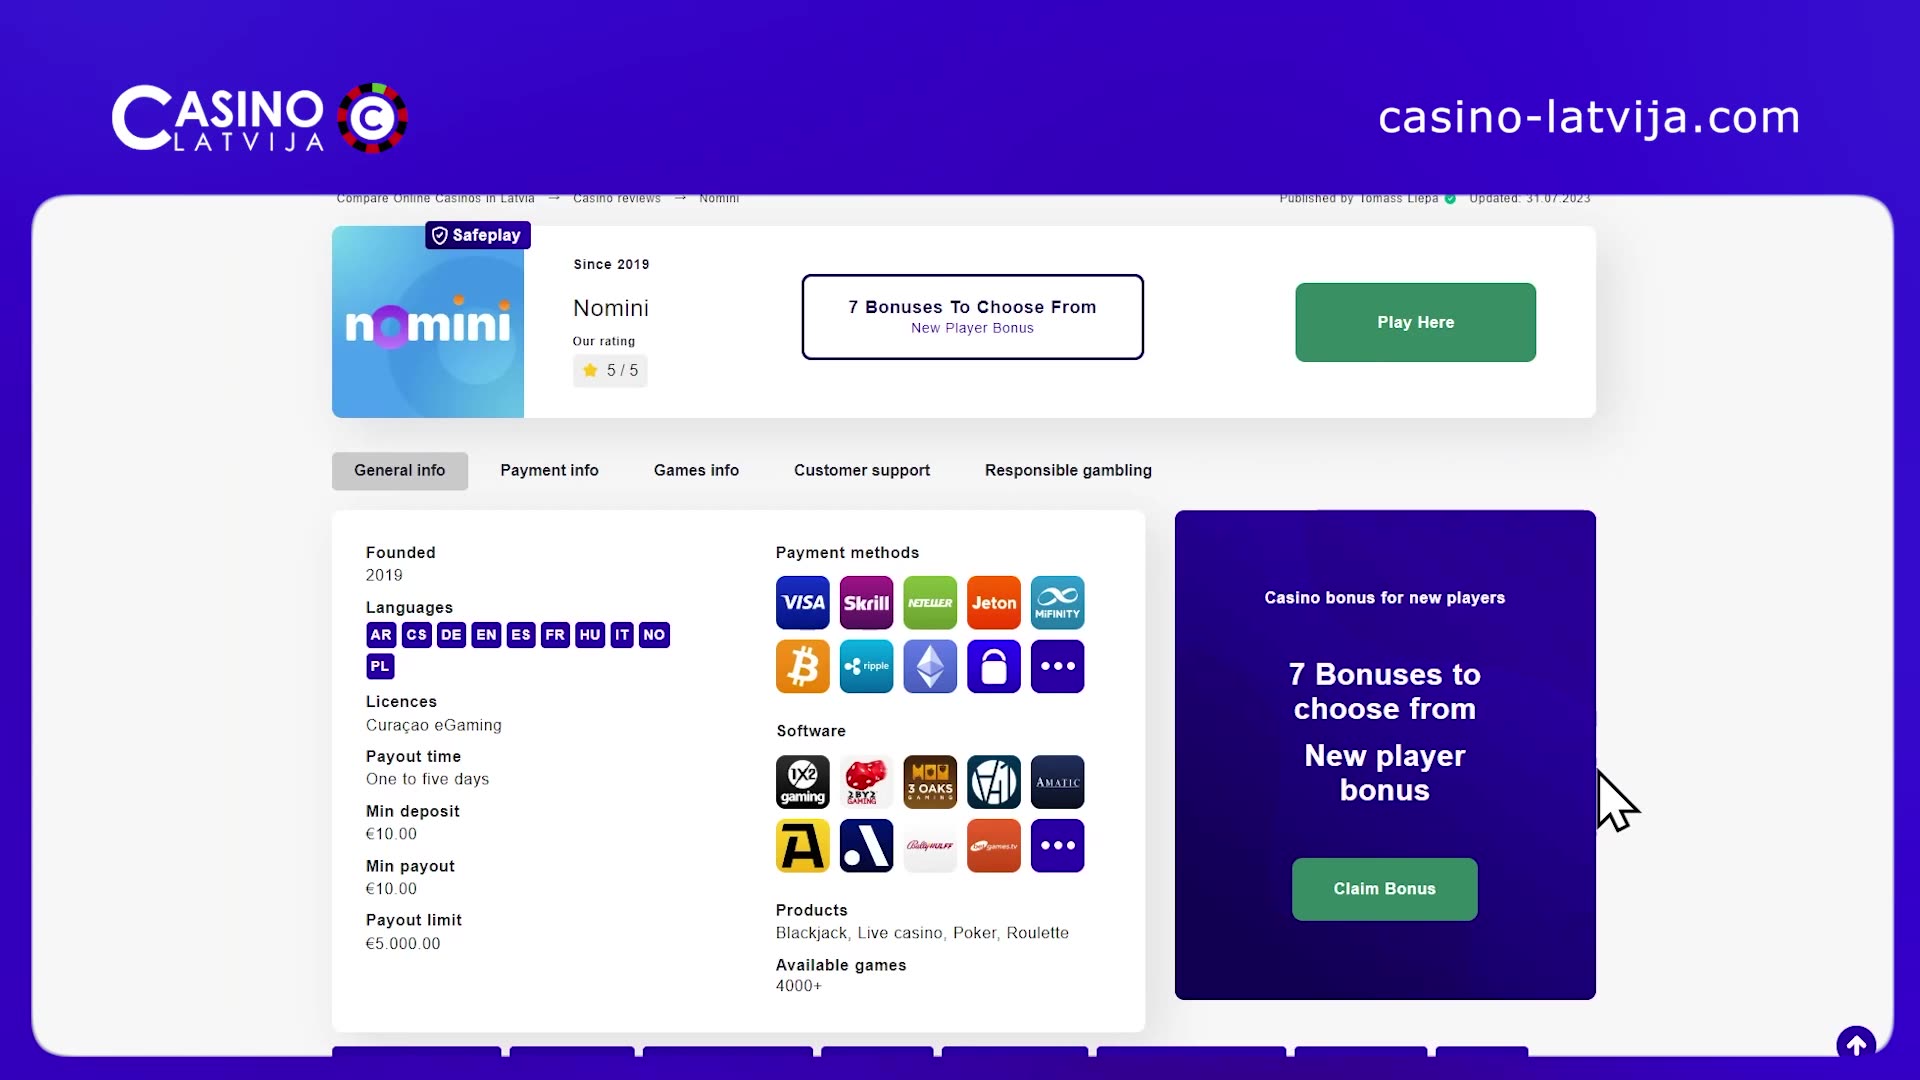 Nomini Casino Review